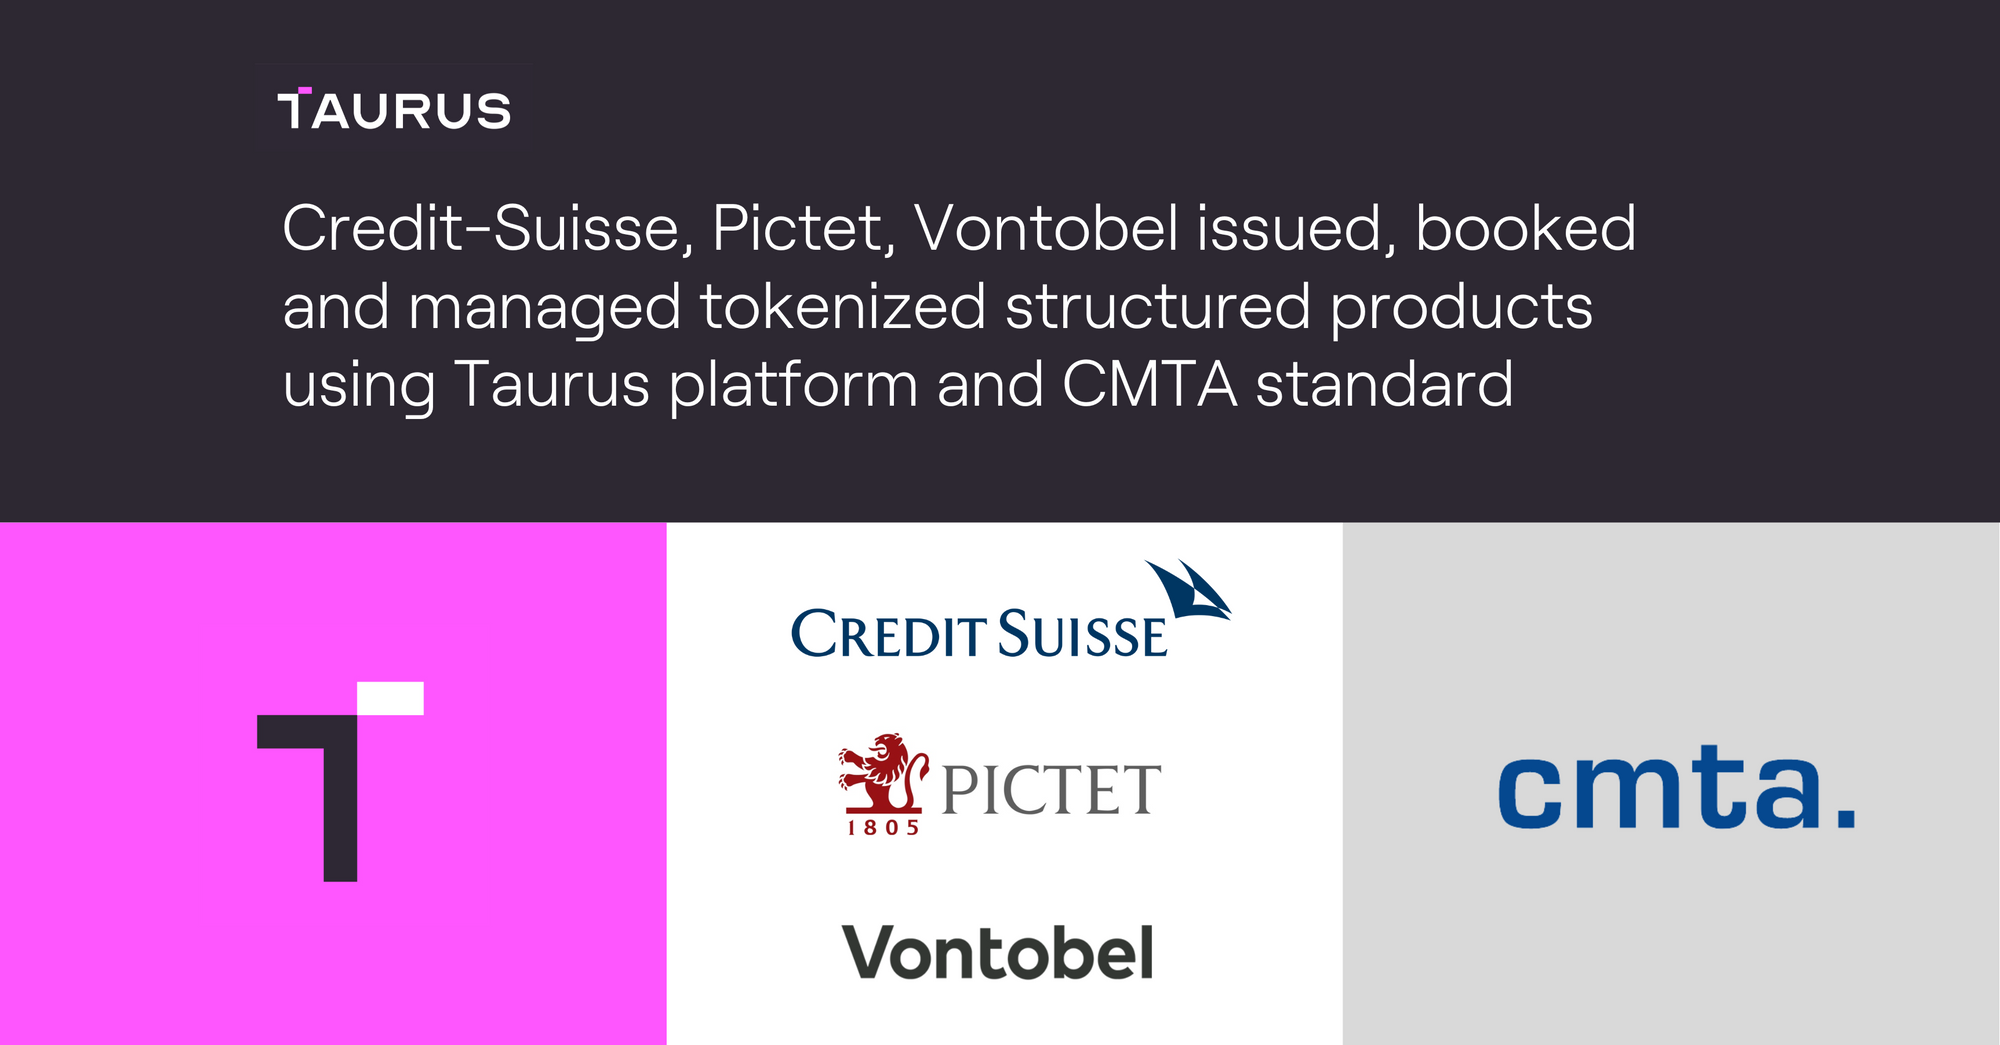 taurus logo on pink background, vontobel, credit suisse and pictet logo on white background, cmta logo on grey background